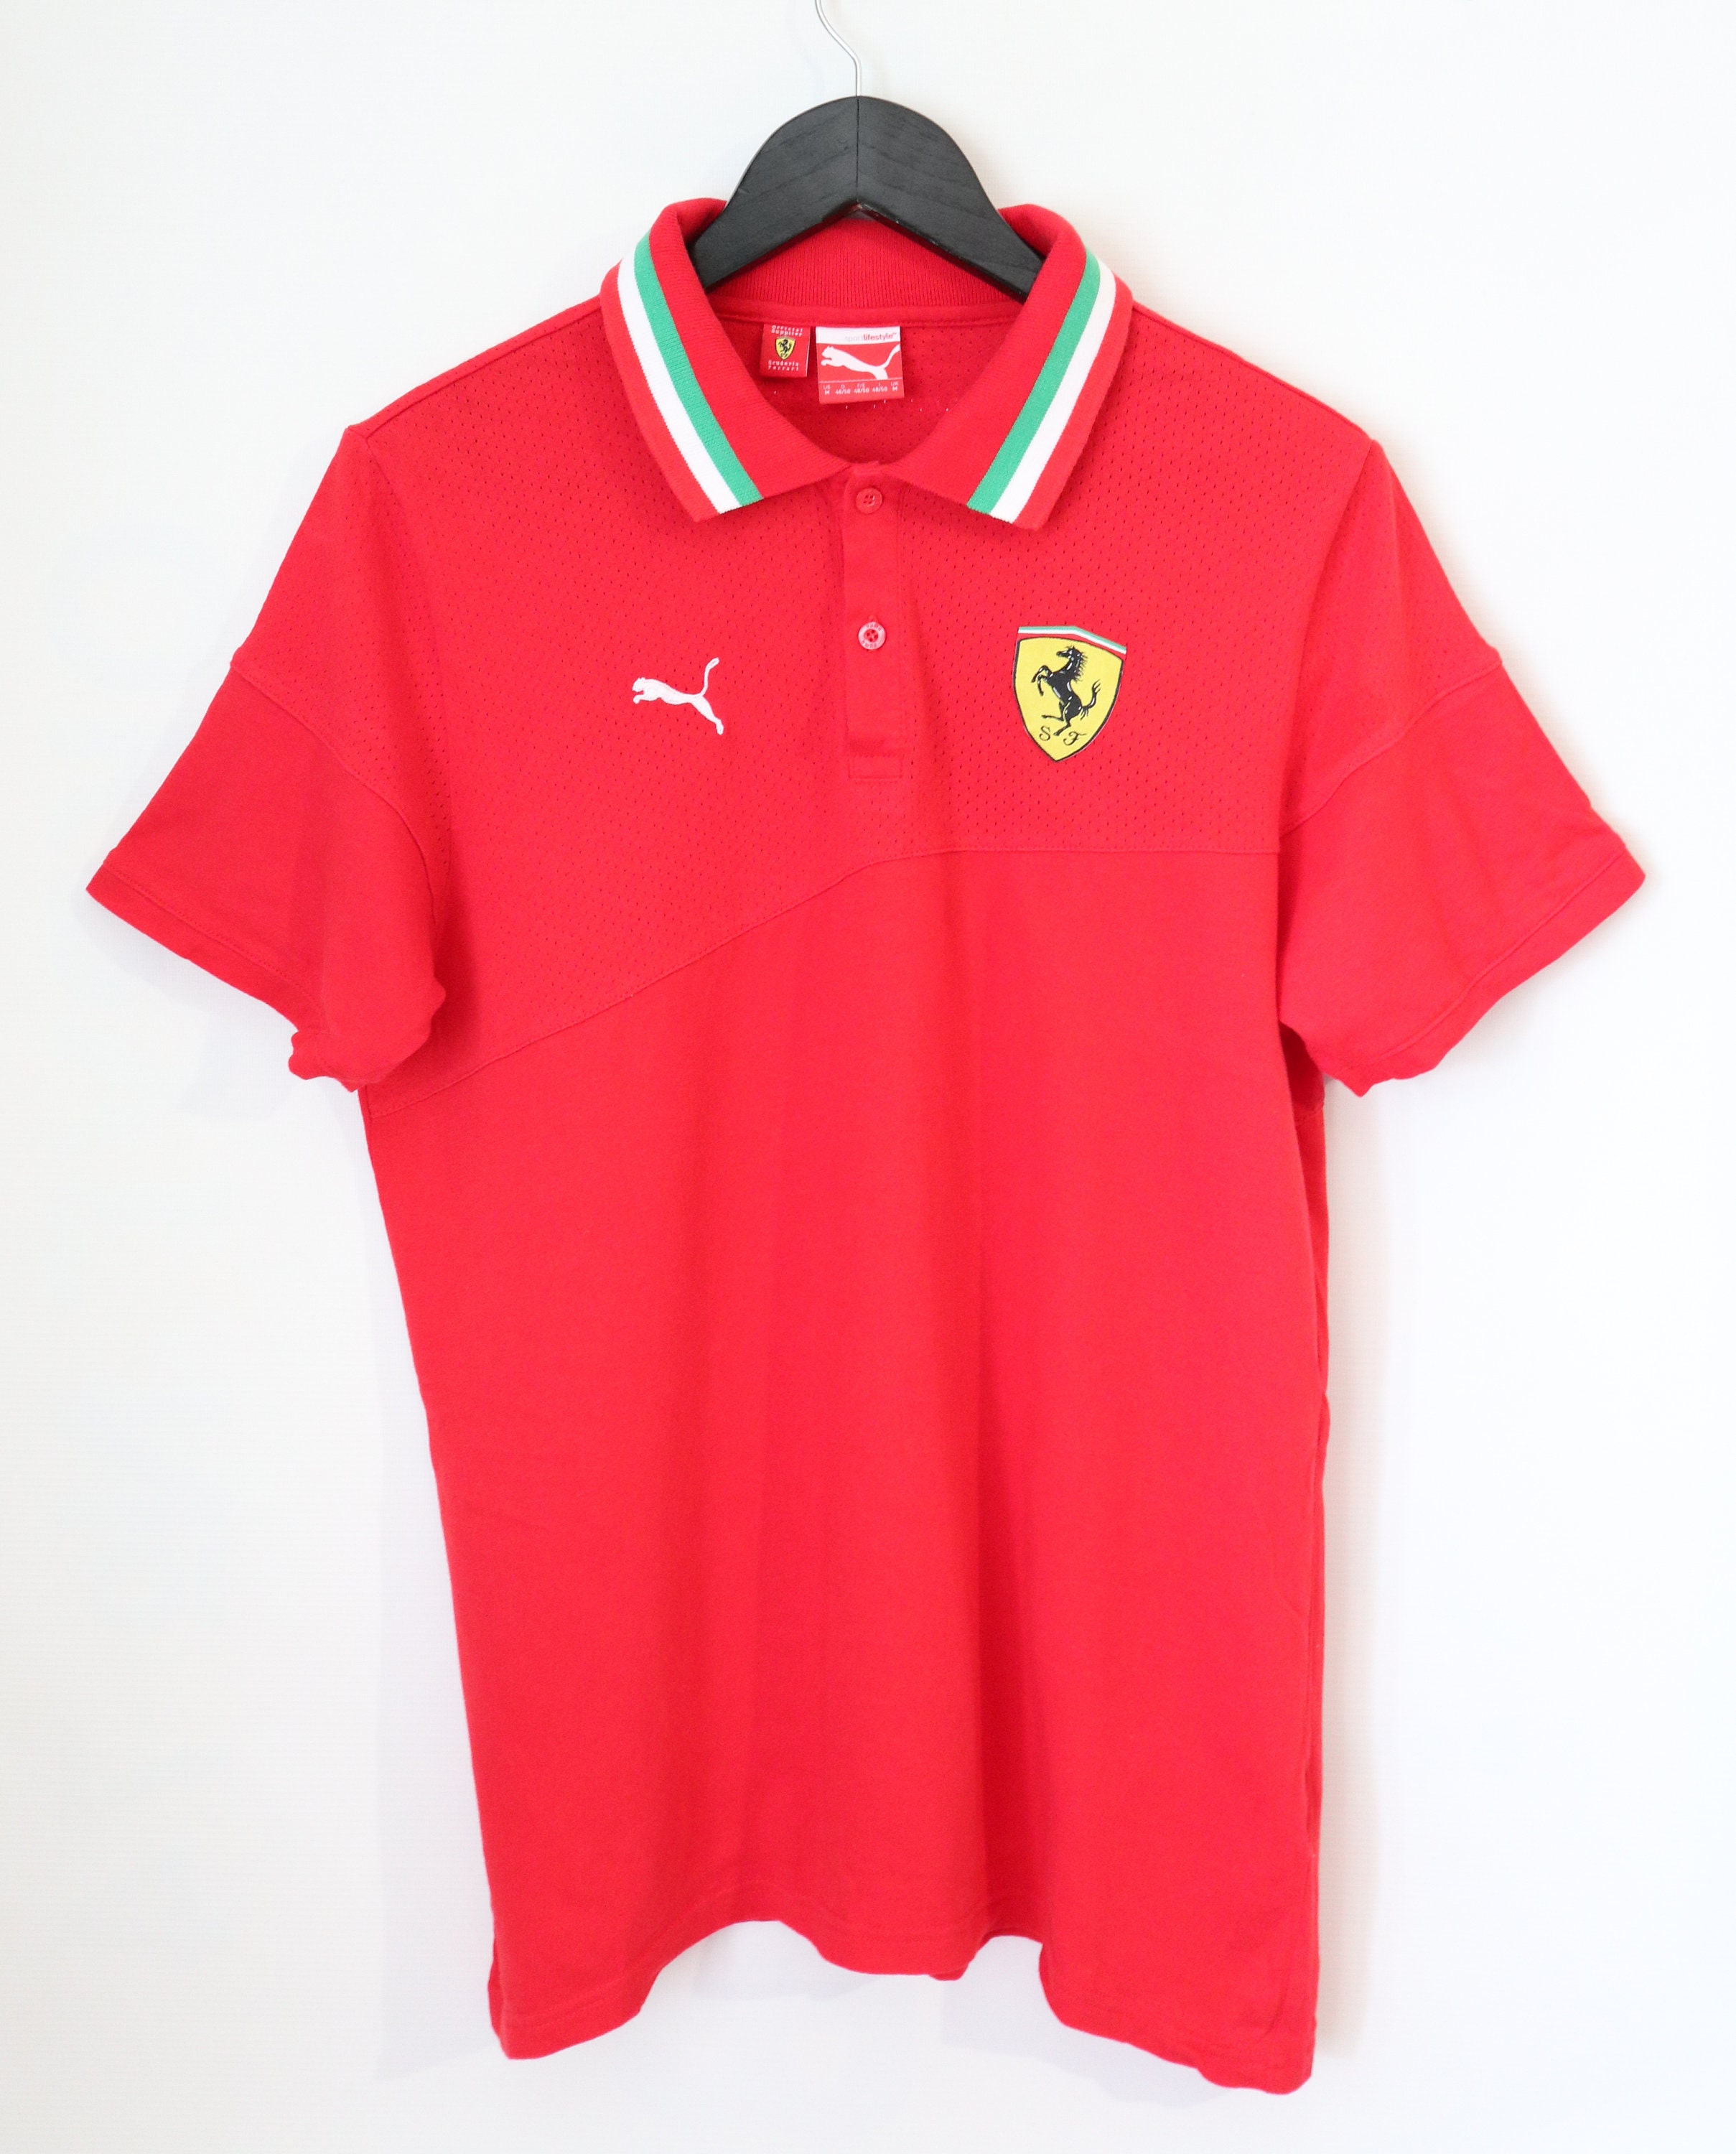 F1 Scuderia Ferrari team racing polo shirt jersey trikot | Etsy